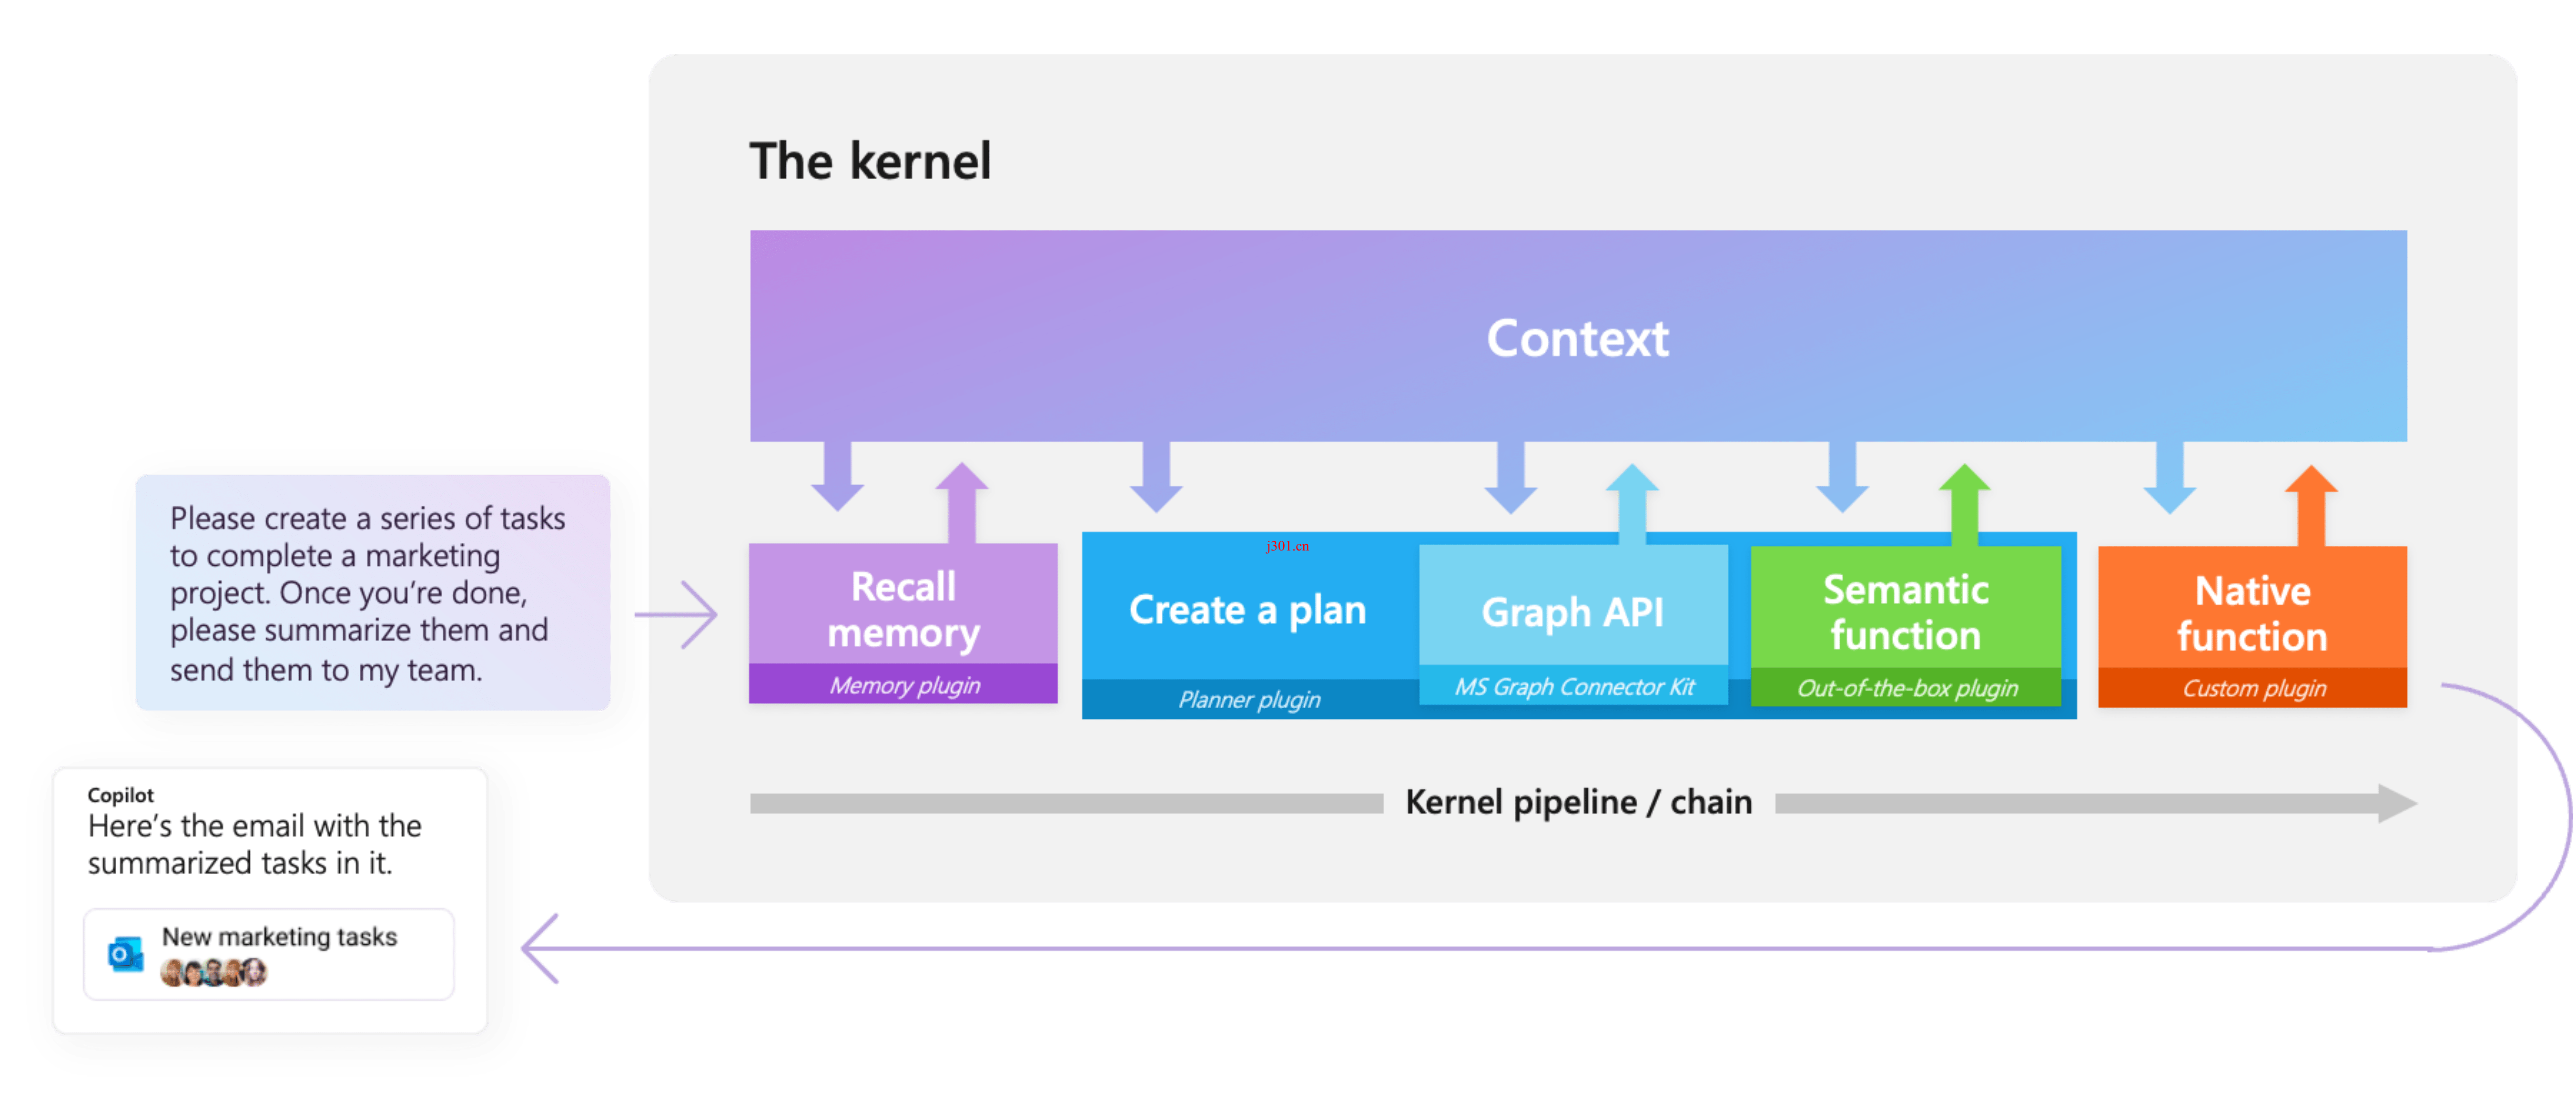 github_ai_big_model_semantic_kernel_1